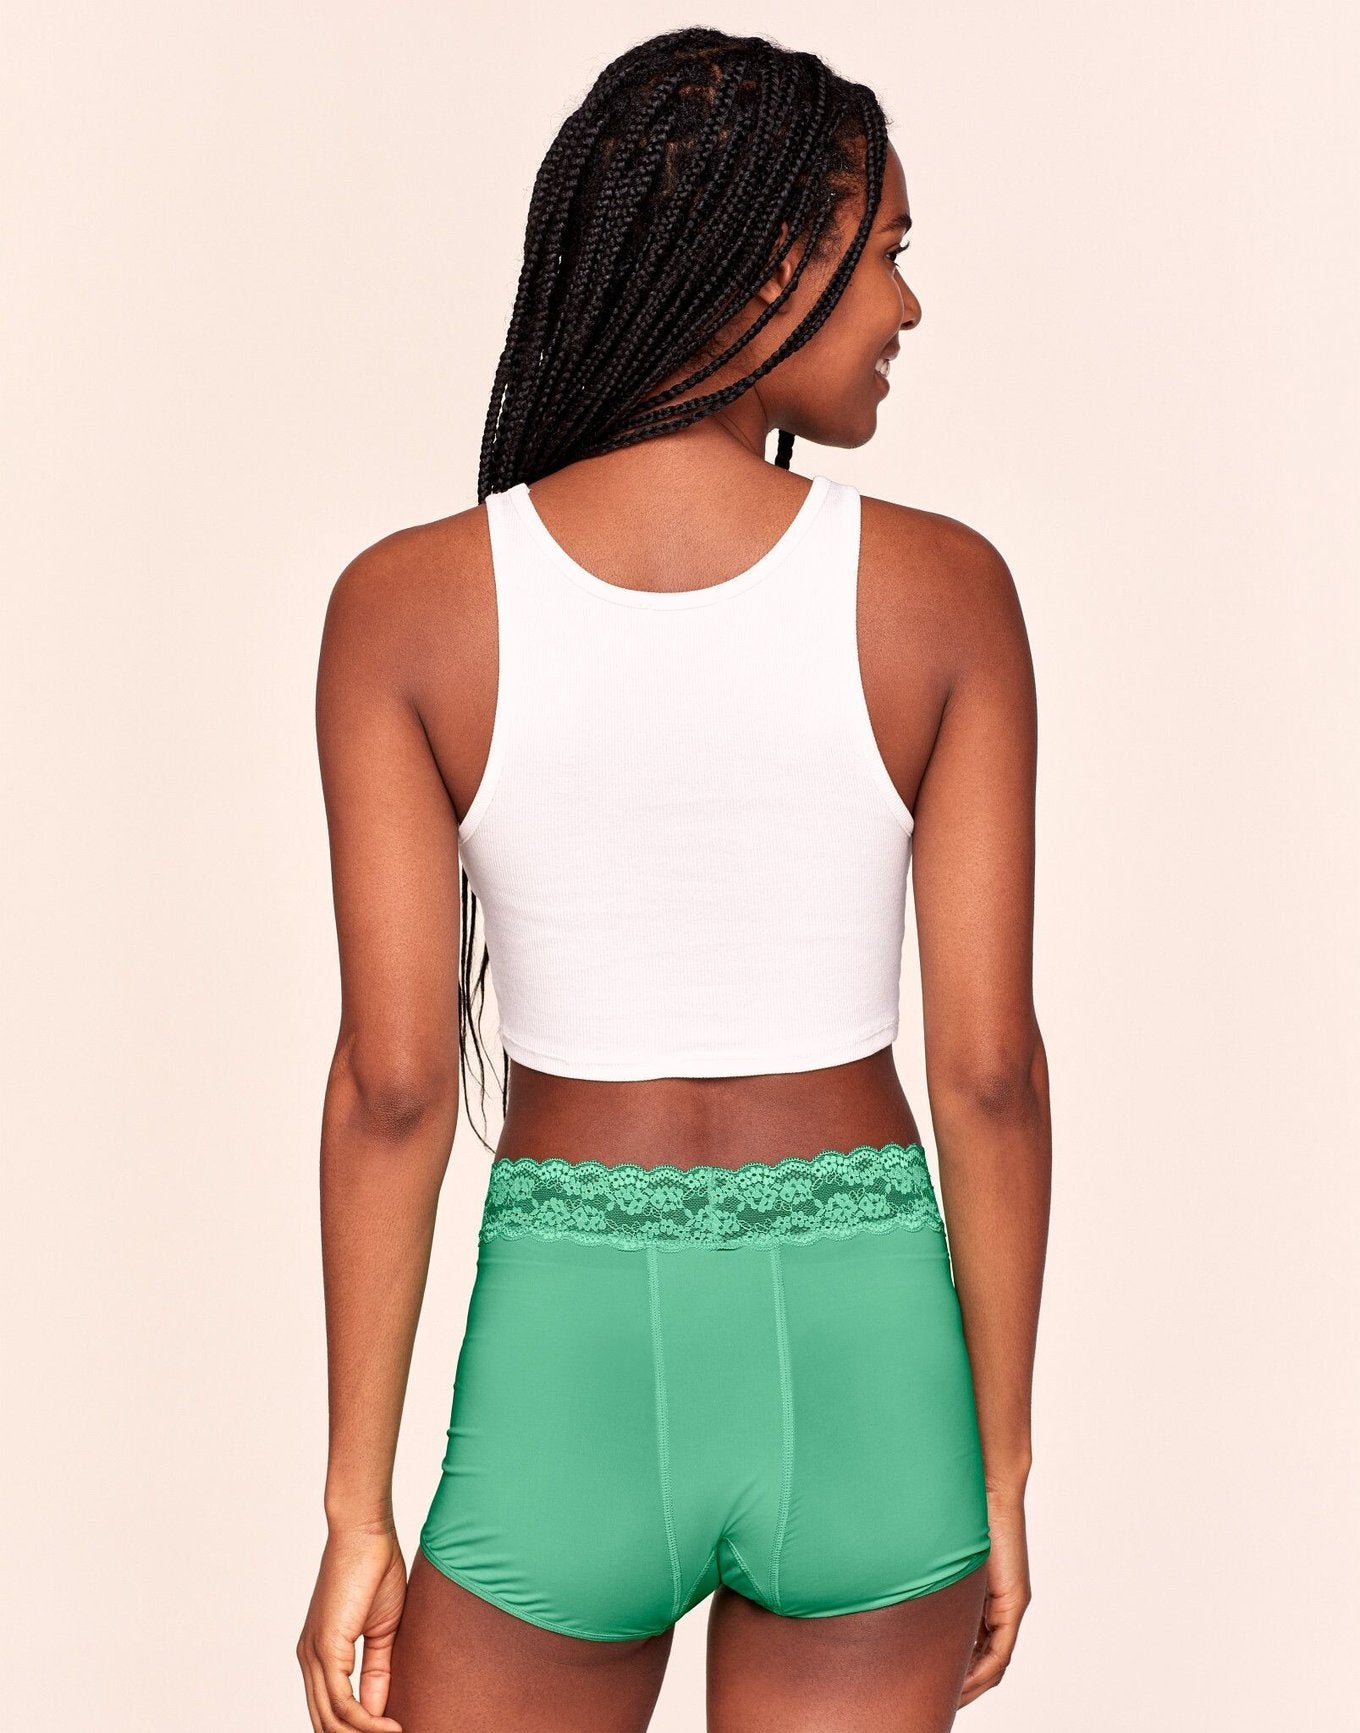 Joyja Emily period-proof panty in color Jade Cream and shape shortie